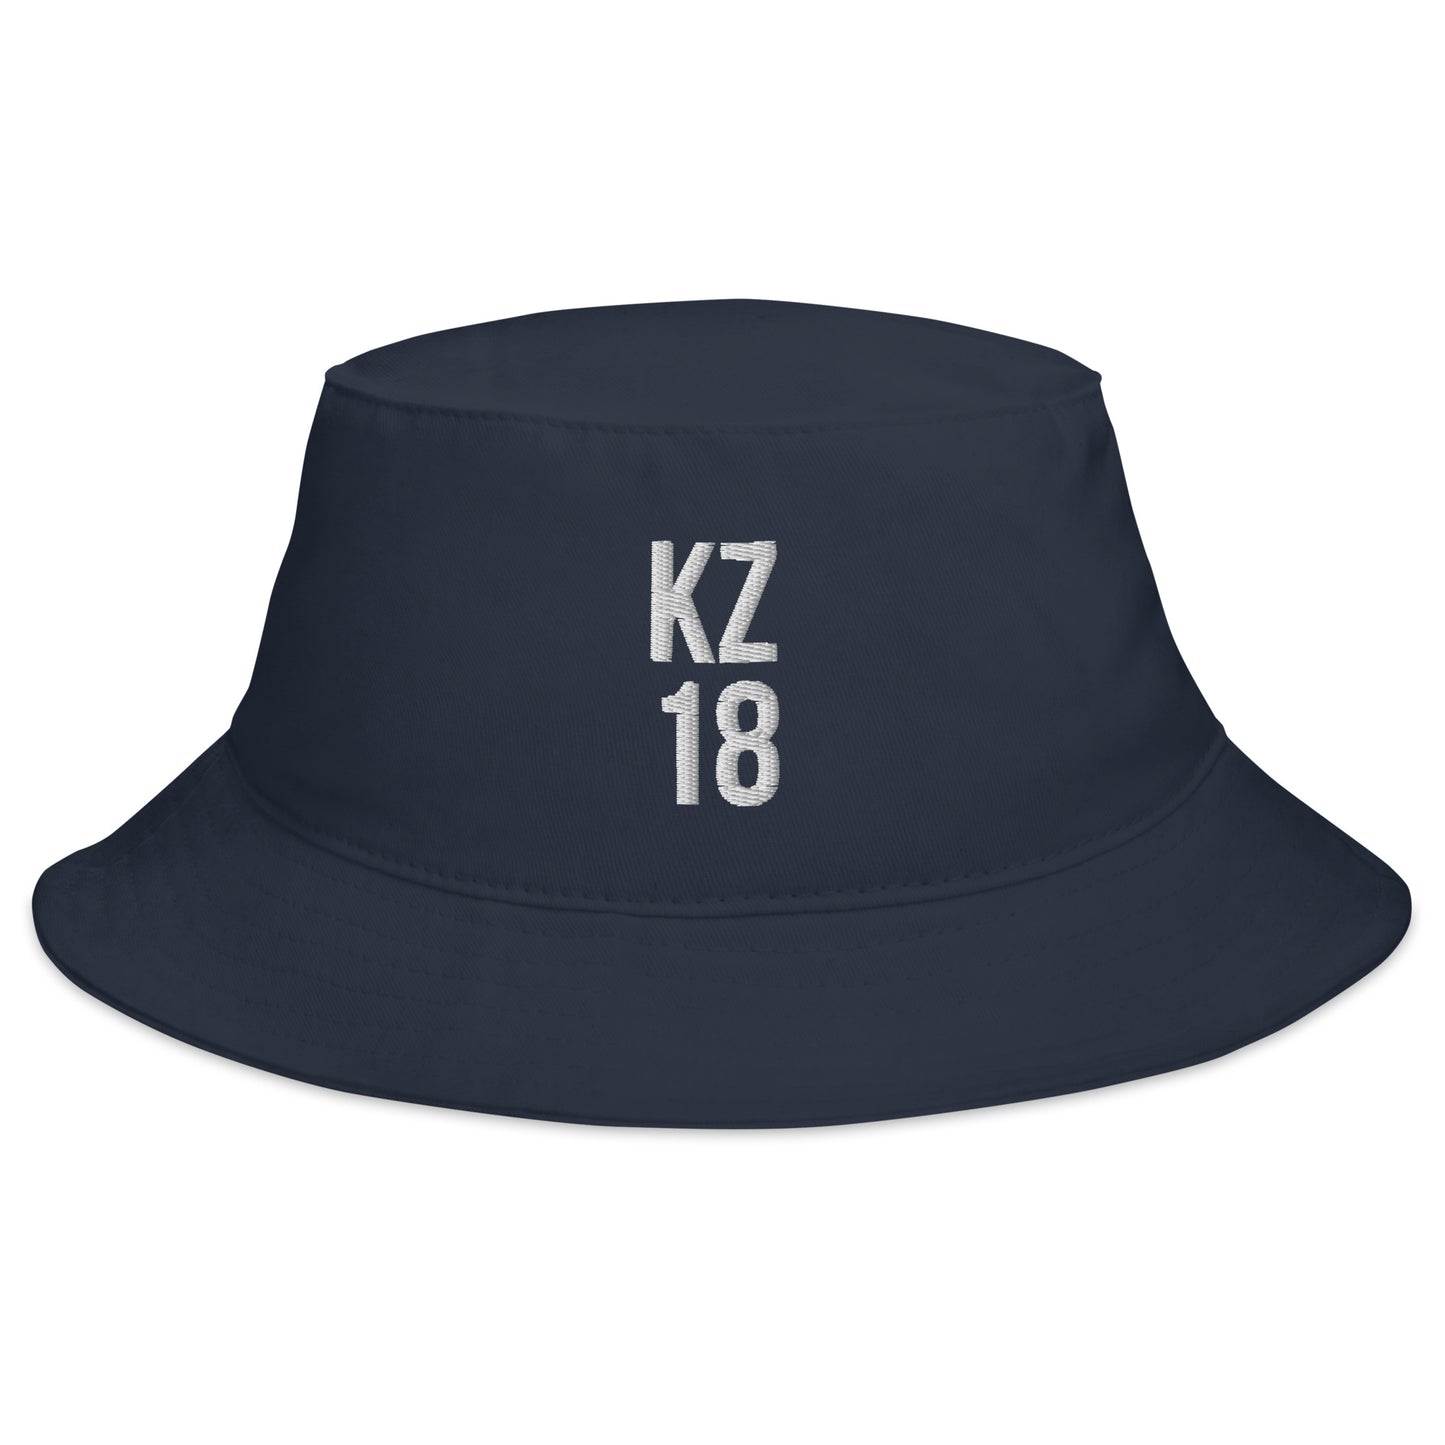 KZ 18 Bucket Hat